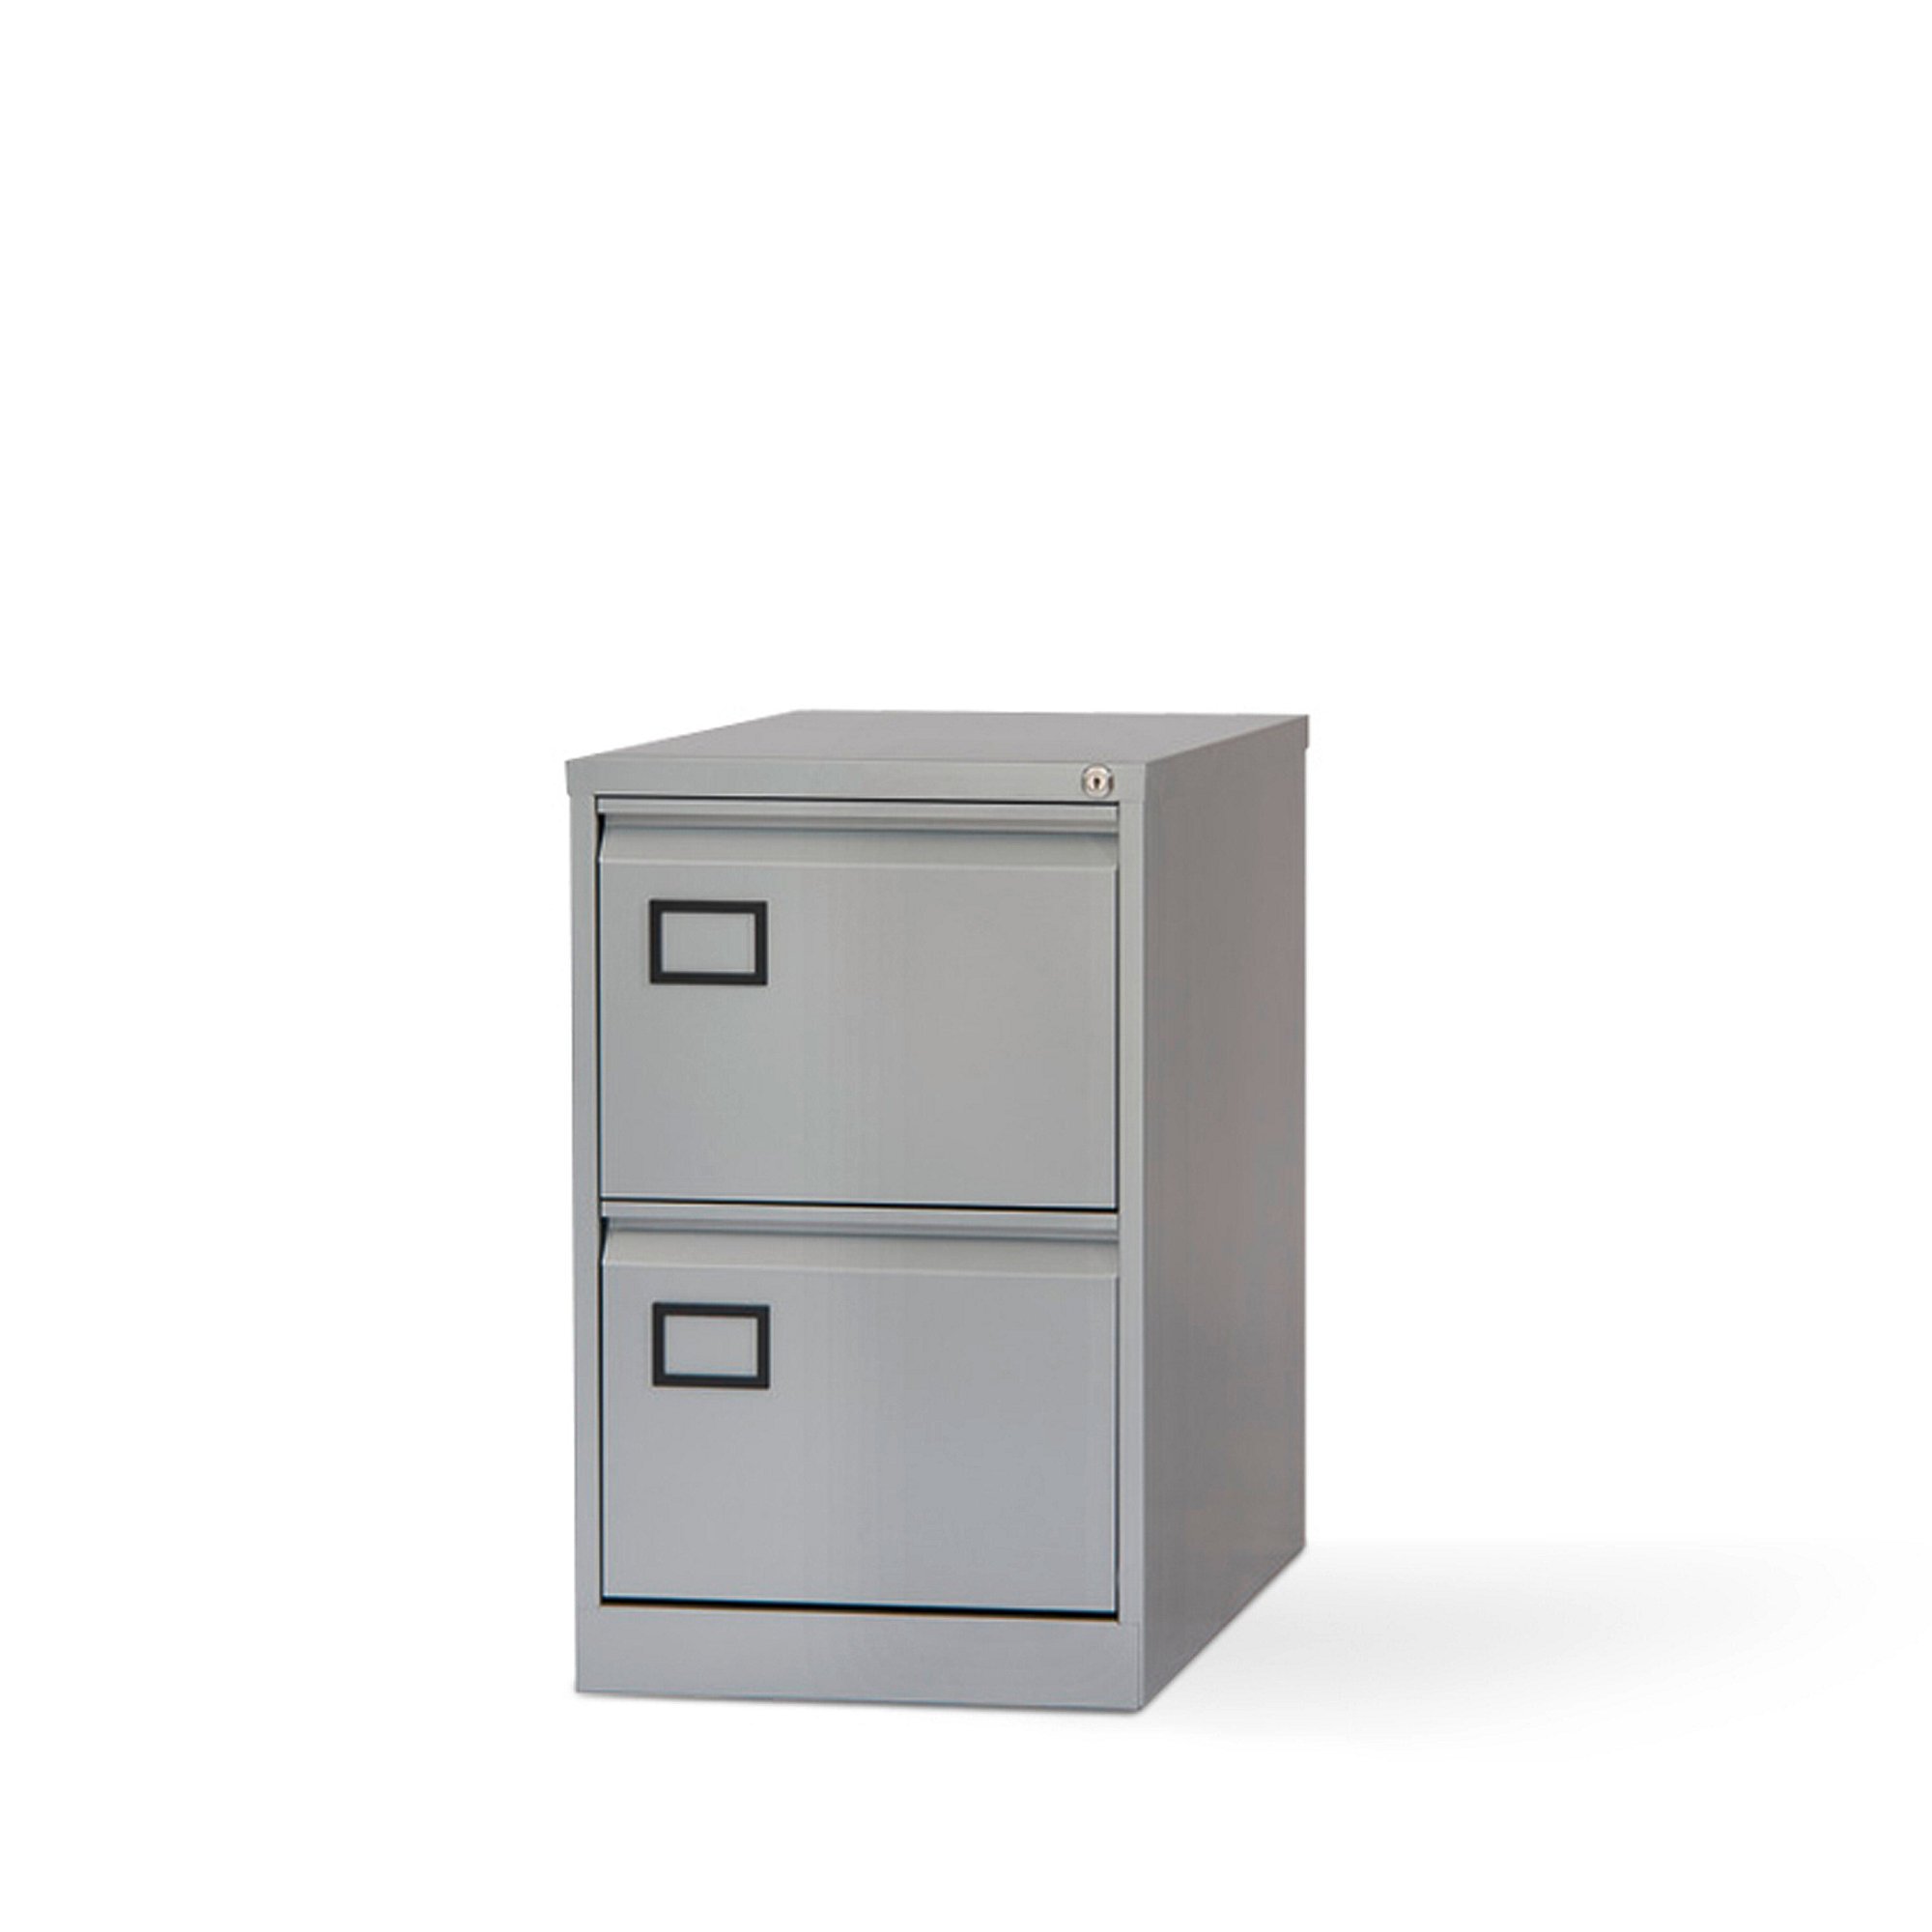 Bisley foolscap filing cabinet, 2 drawers, grey